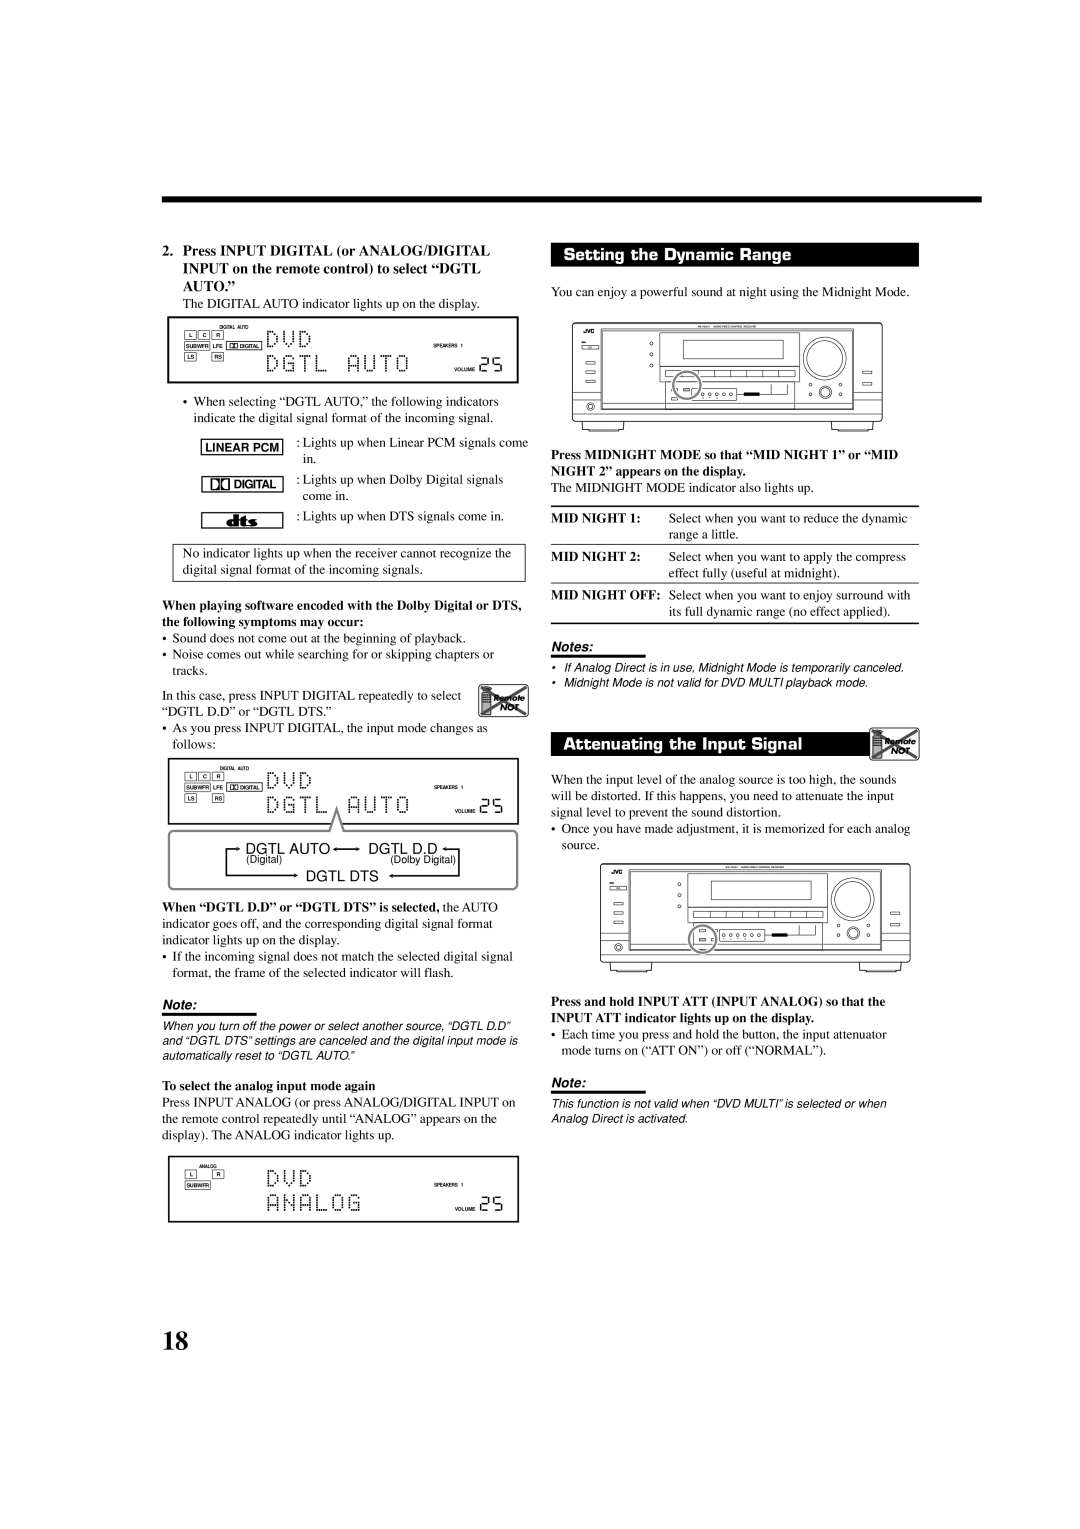 JVC LVT1007-010A[A] manual Setting the Dynamic Range, Attenuating the Input Signal, Dgtl Auto, Dgtl D.D, Dgtl Dts 